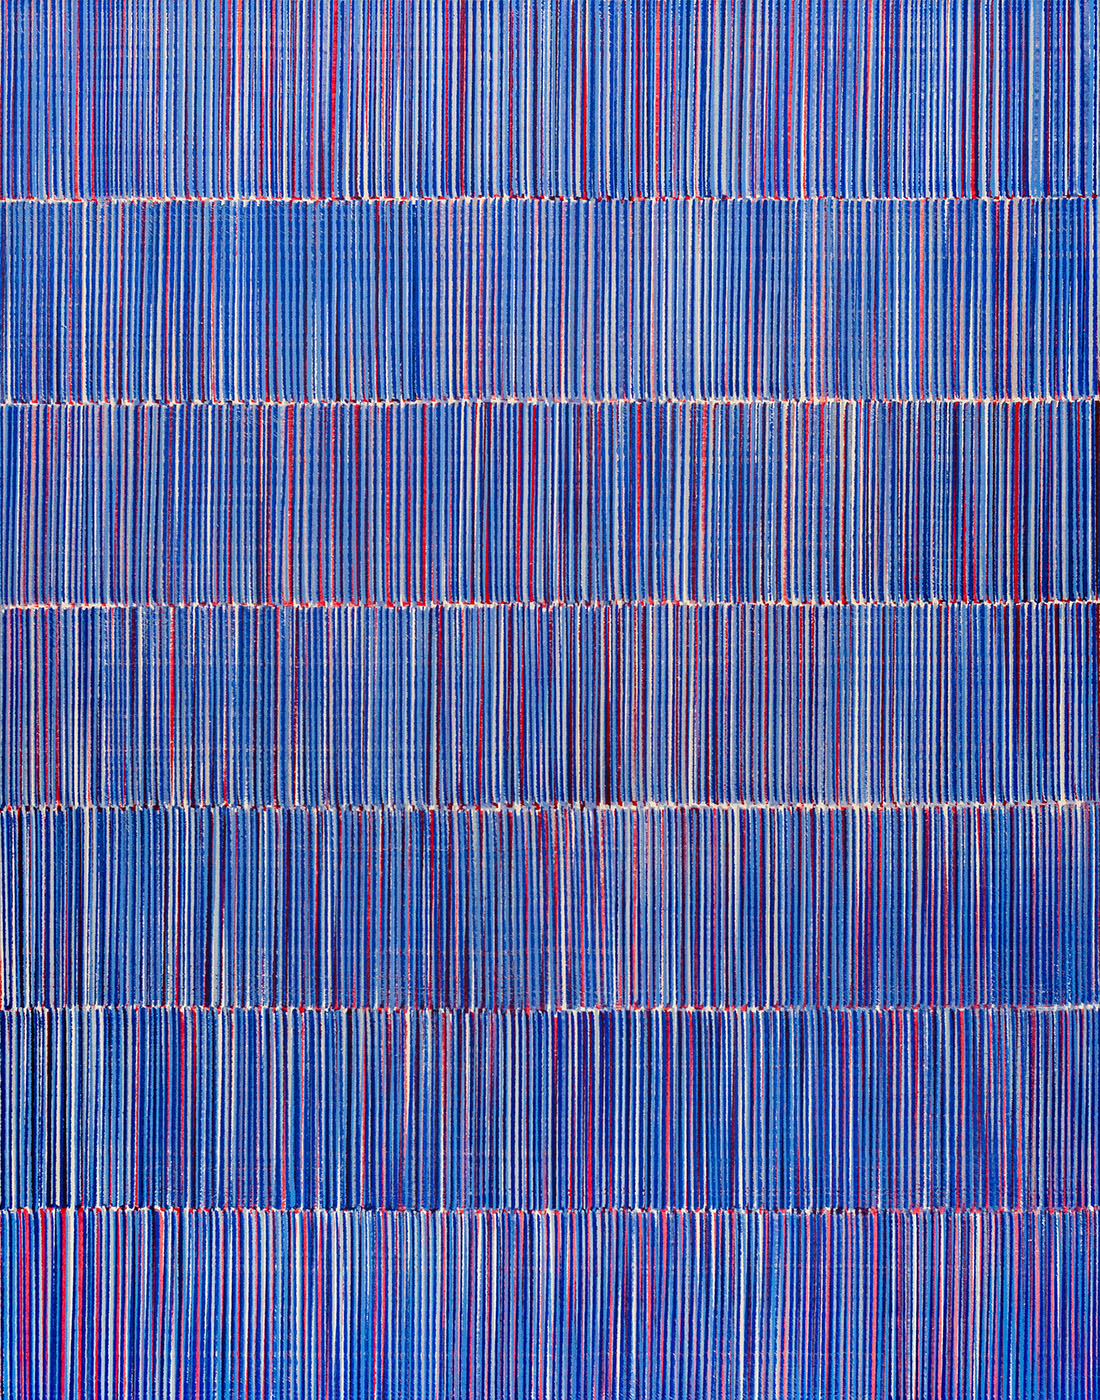 Nikola Dimitrov, FarbKlang BlauRot III, 2019, Pigmente, Bindemittel auf Leinwand, 140 × 110 cm